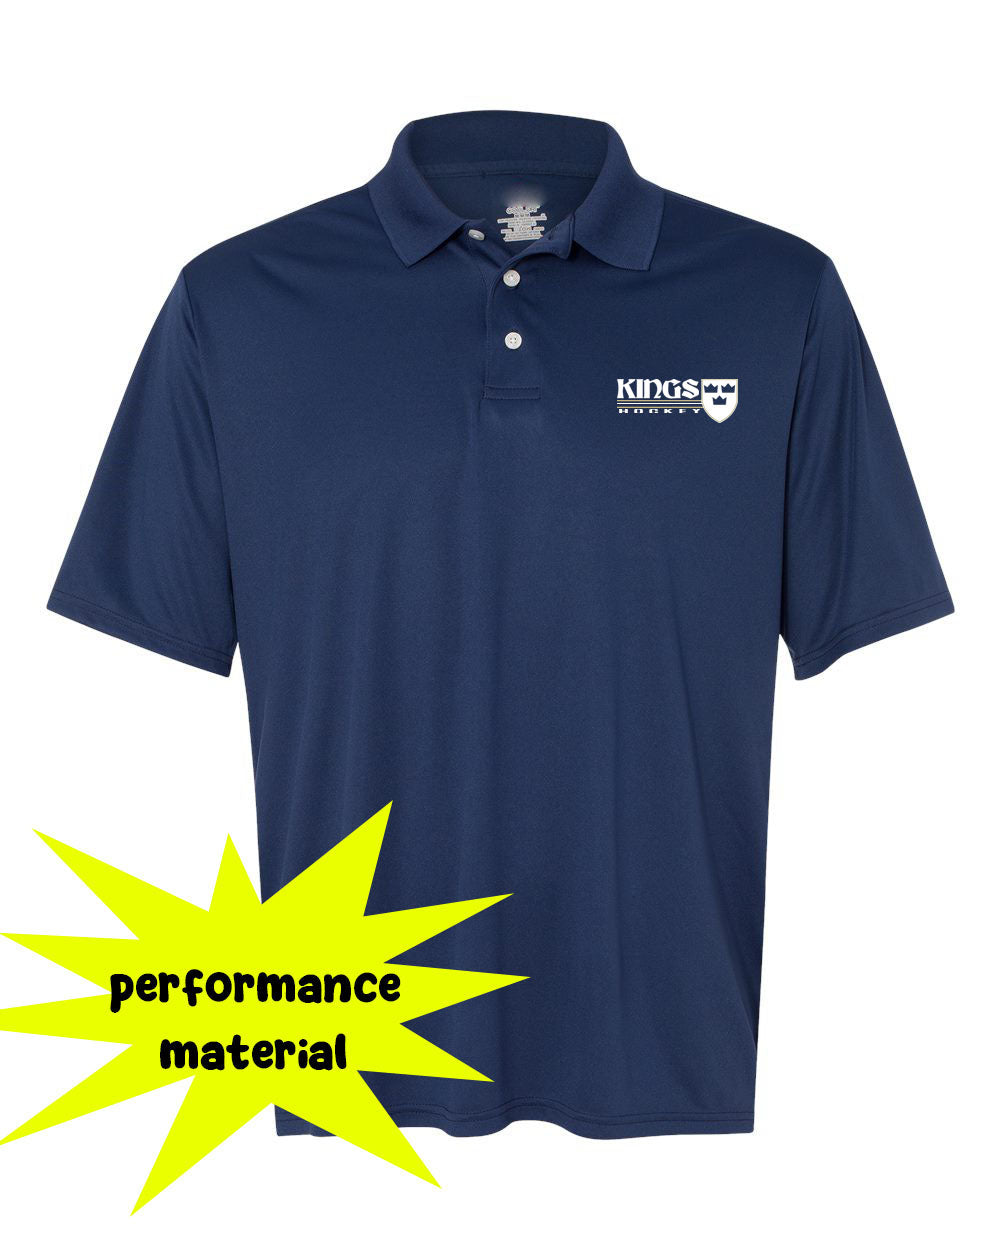 Kings Hockey Design 3 Performance Material Polo T-Shirt